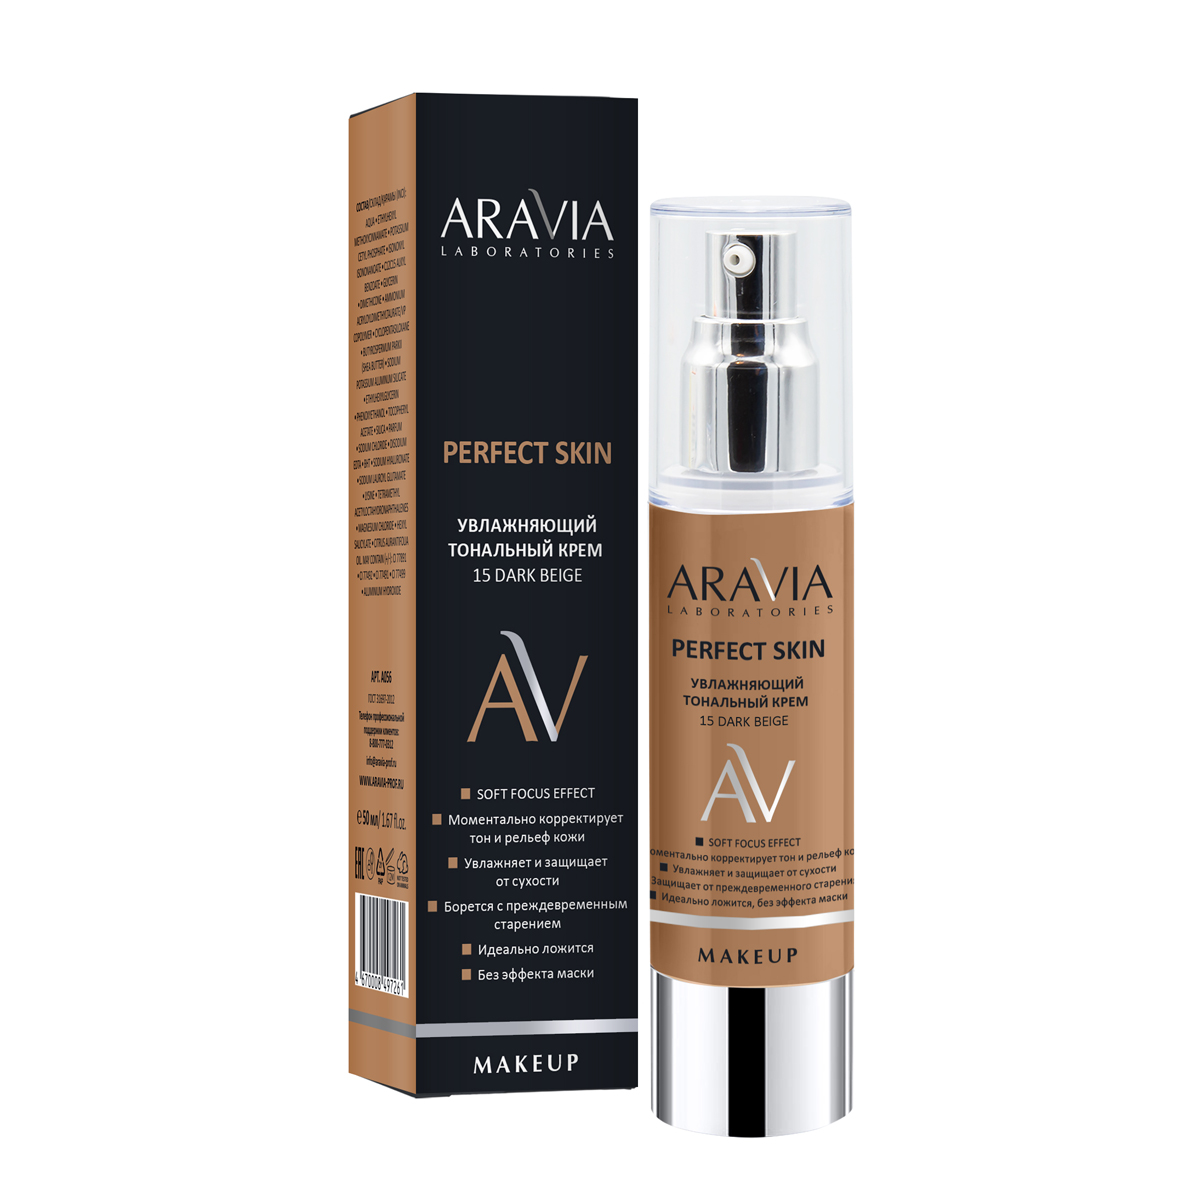 Aravia Laboratories Увлажняющий тональный крем Perfect Skin 15 Dark beige, 50 мл (Aravia Laboratories, Уход за лицом) от Pharmacosmetica.ru